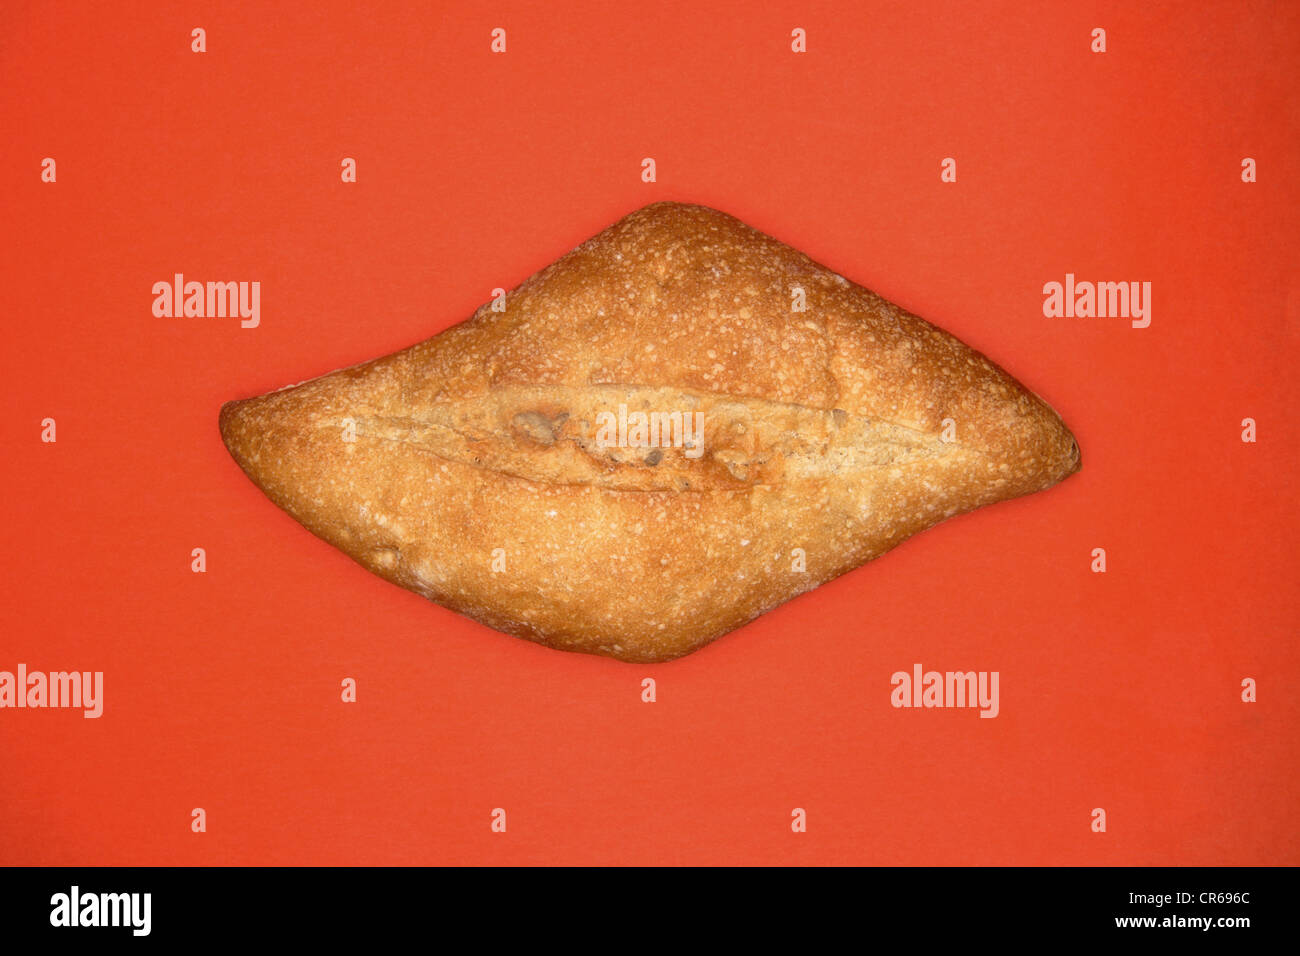 Bread bun on orange background, close up Stock Photo